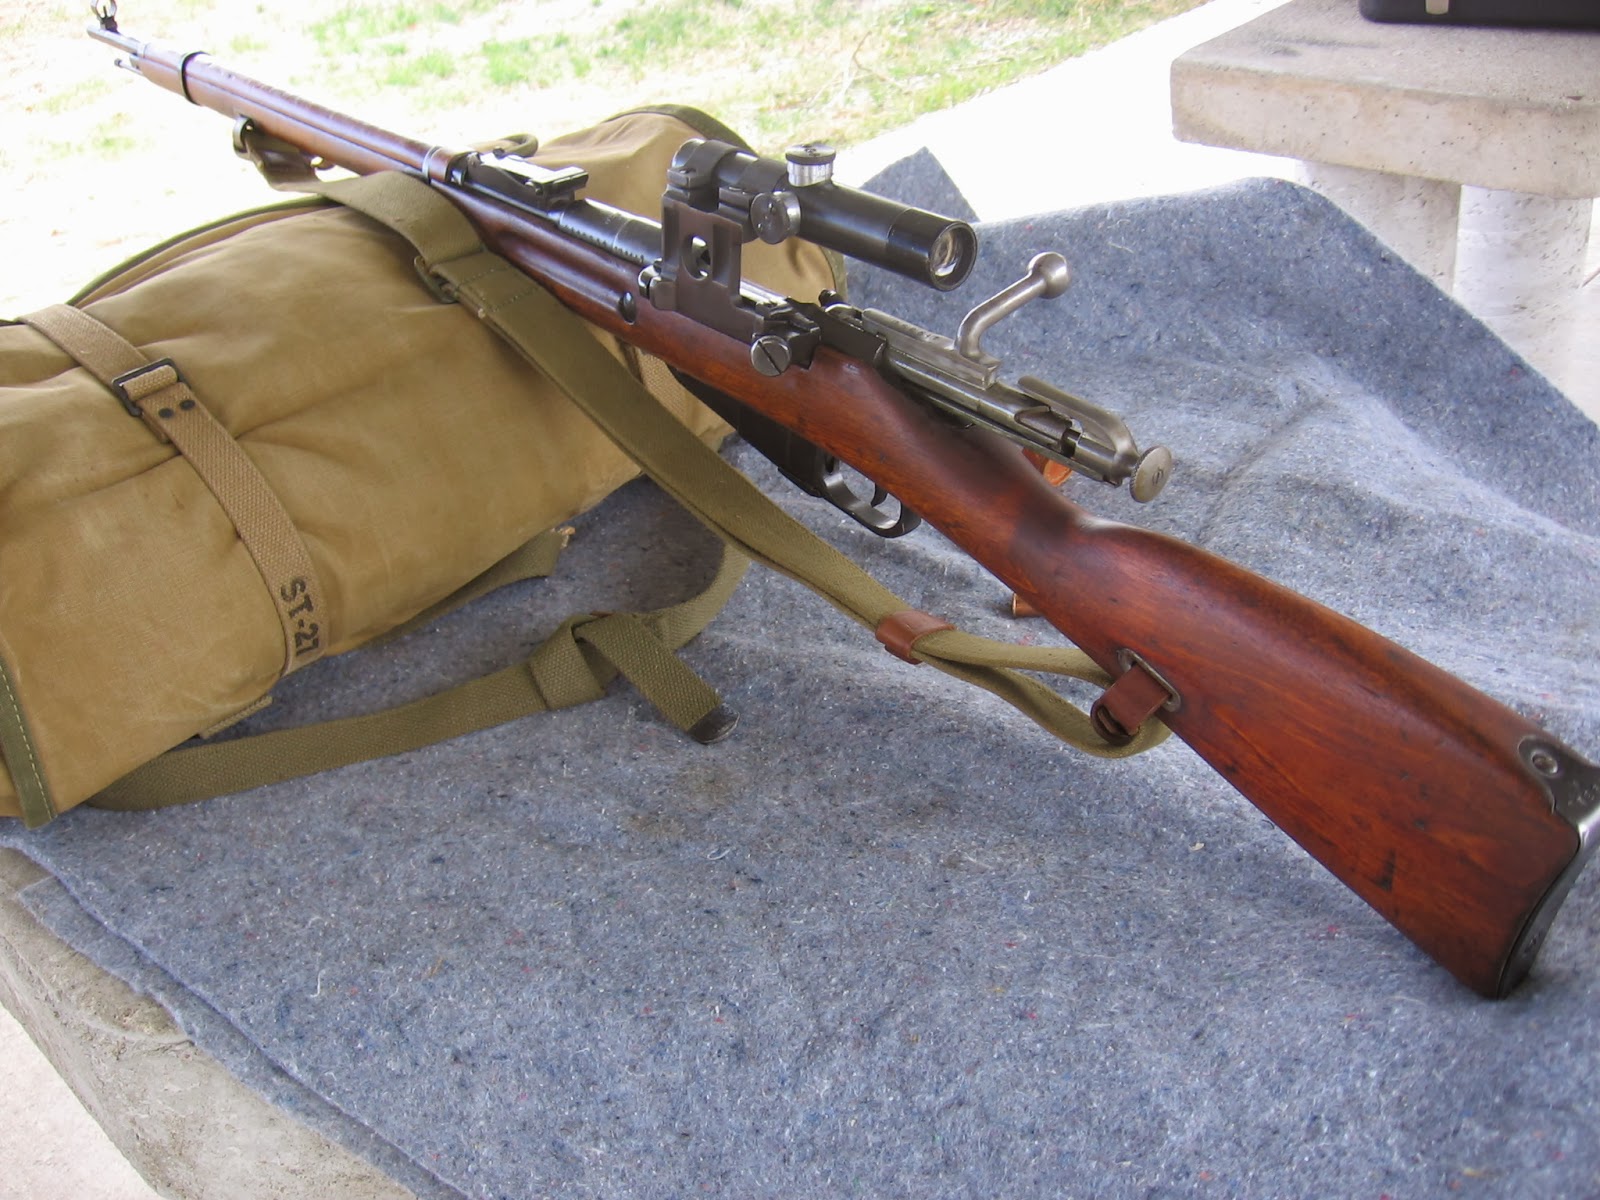 Old School Guns Shooting The Mosin Nagant M91 30 Sniper Rifle